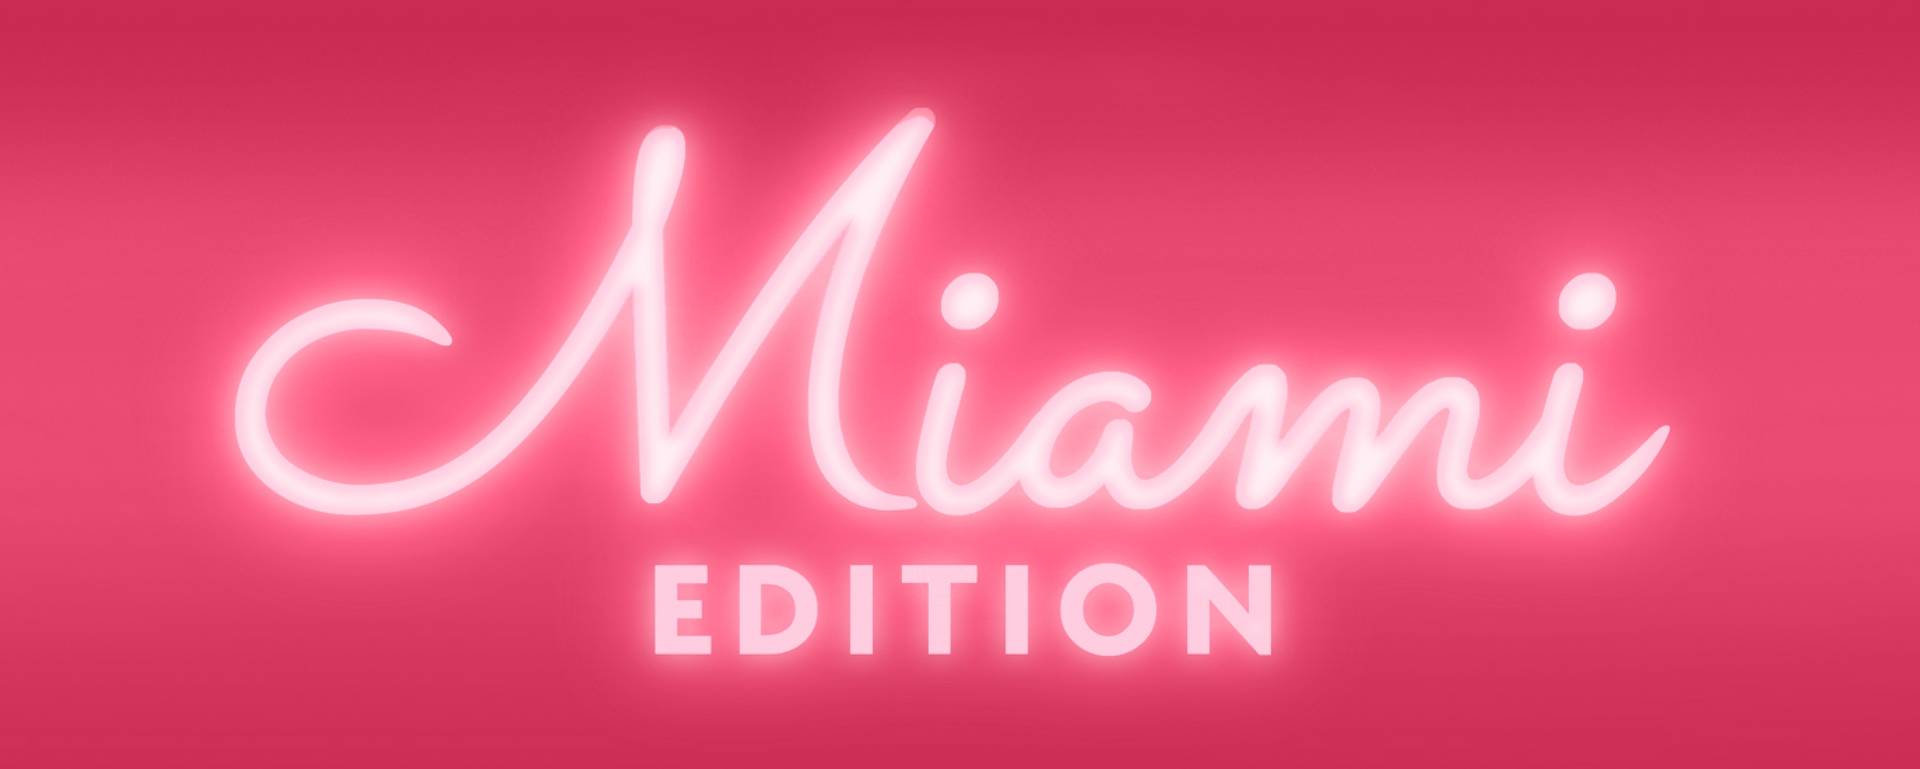 Miami Edition Background Image